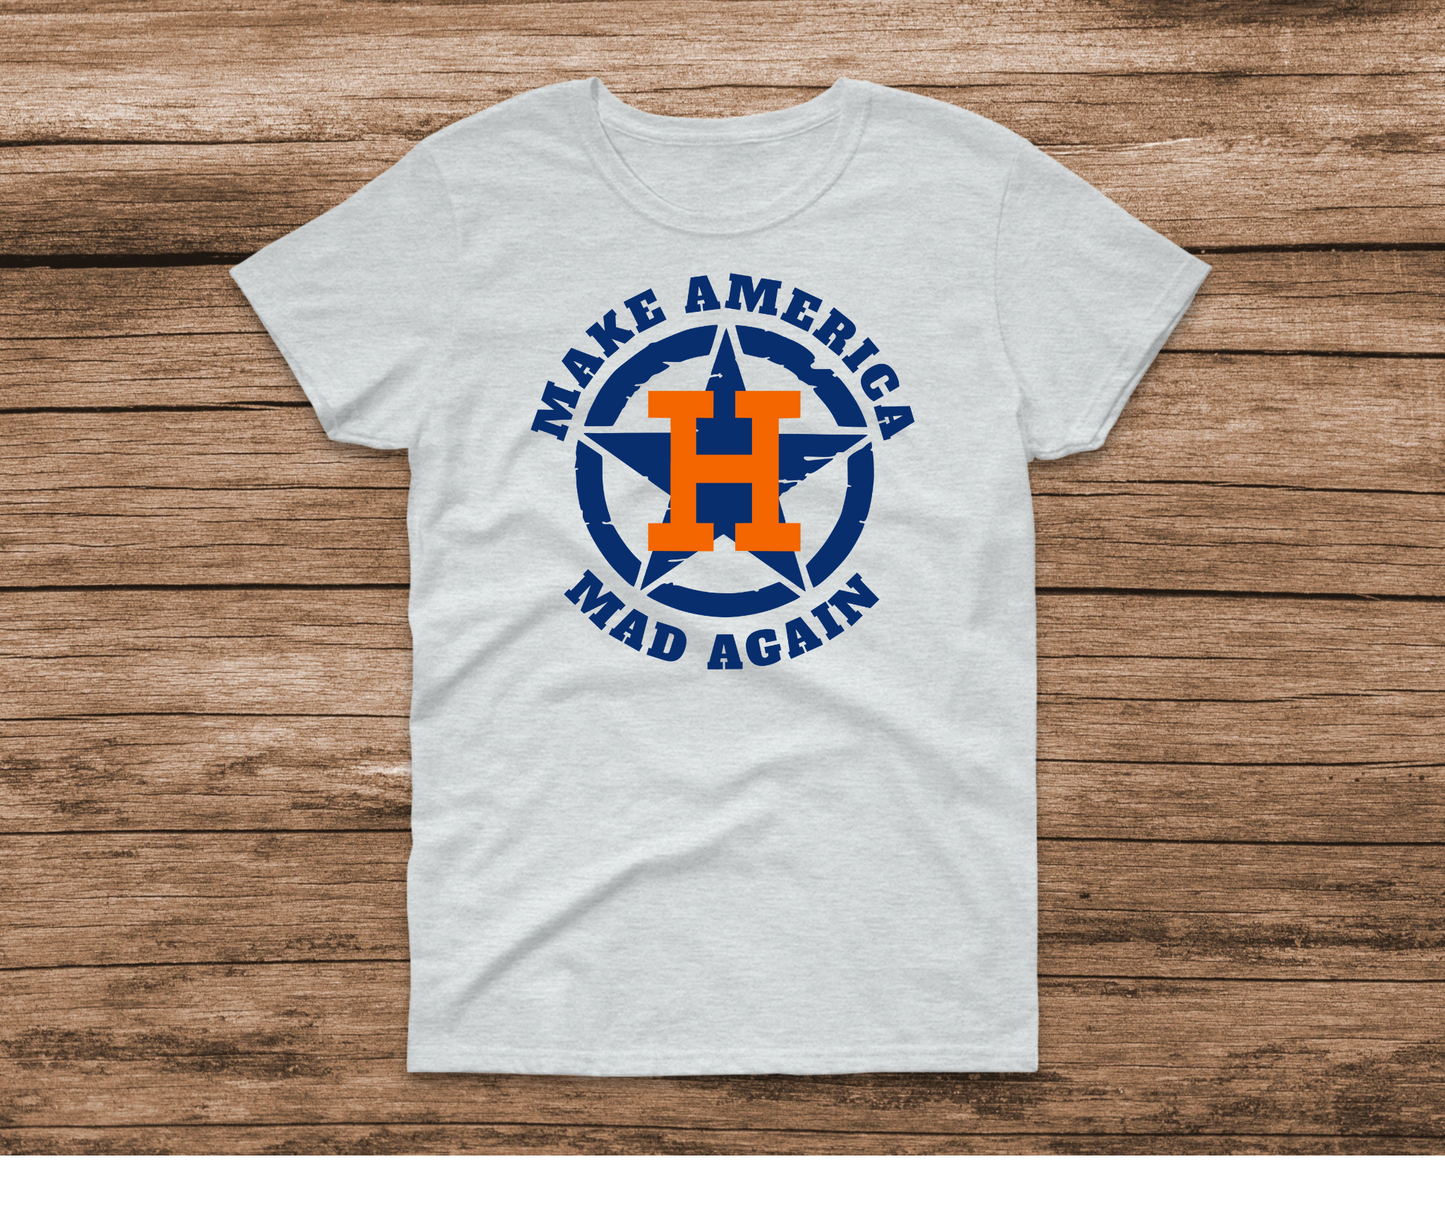 Make America Mad Again Funny Houston Astros Shirt, Houston Astros